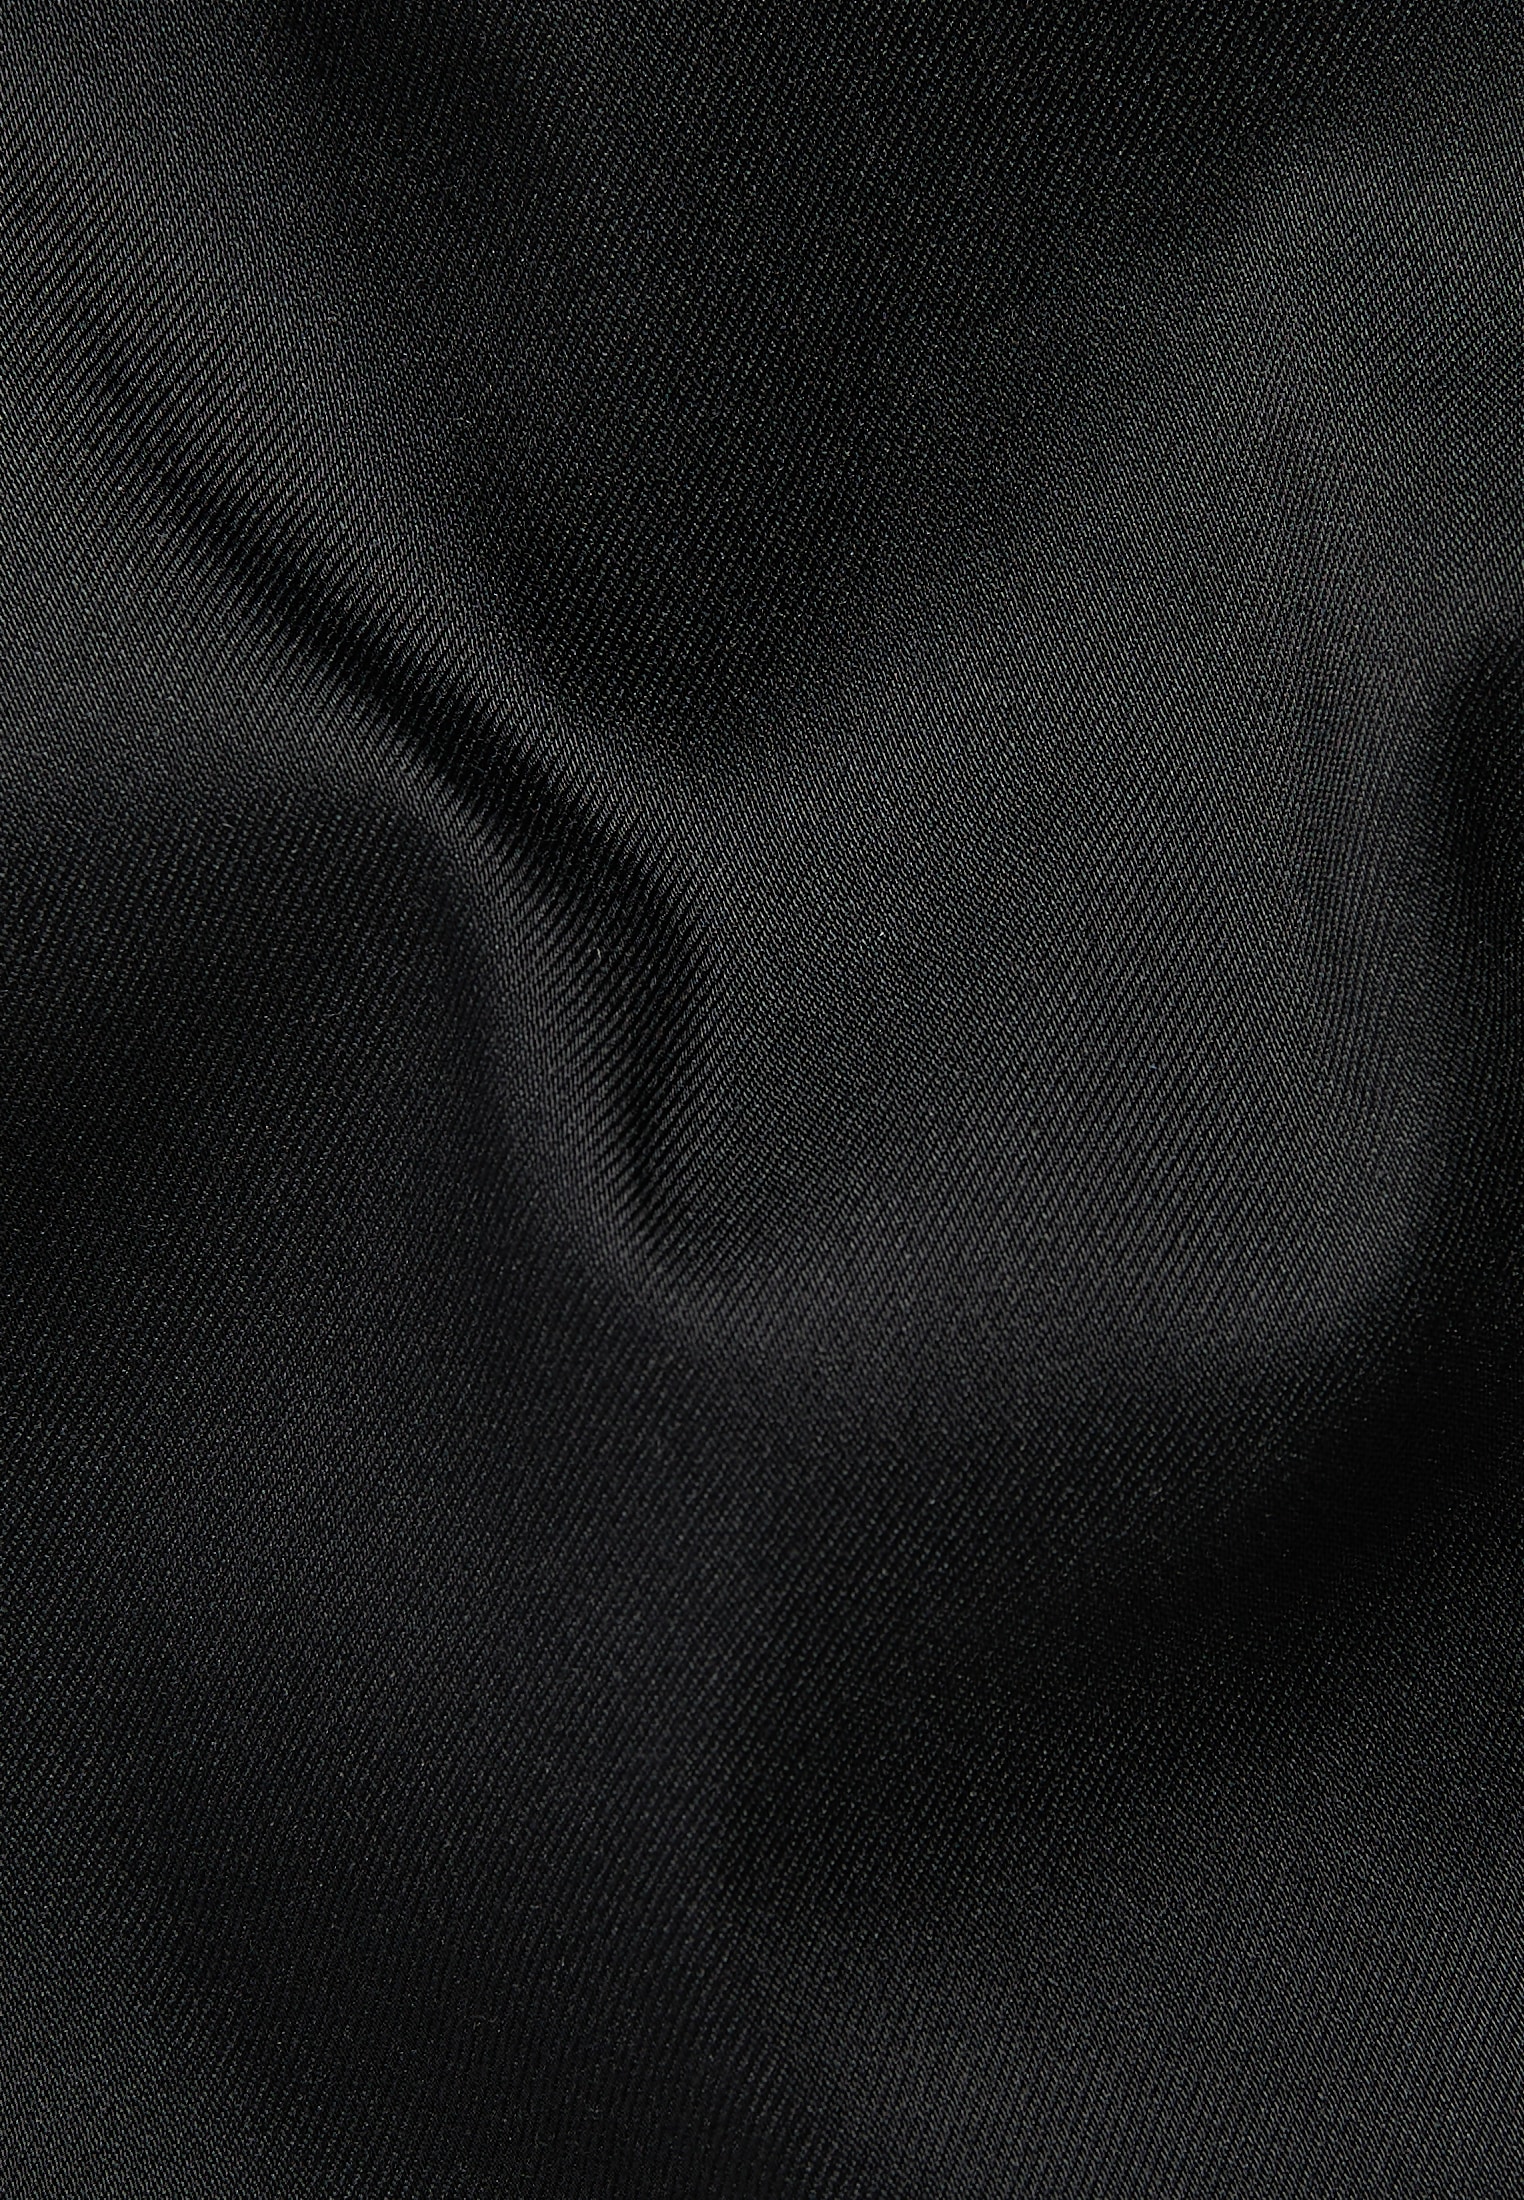 Performance Shirt Blouse in black plain